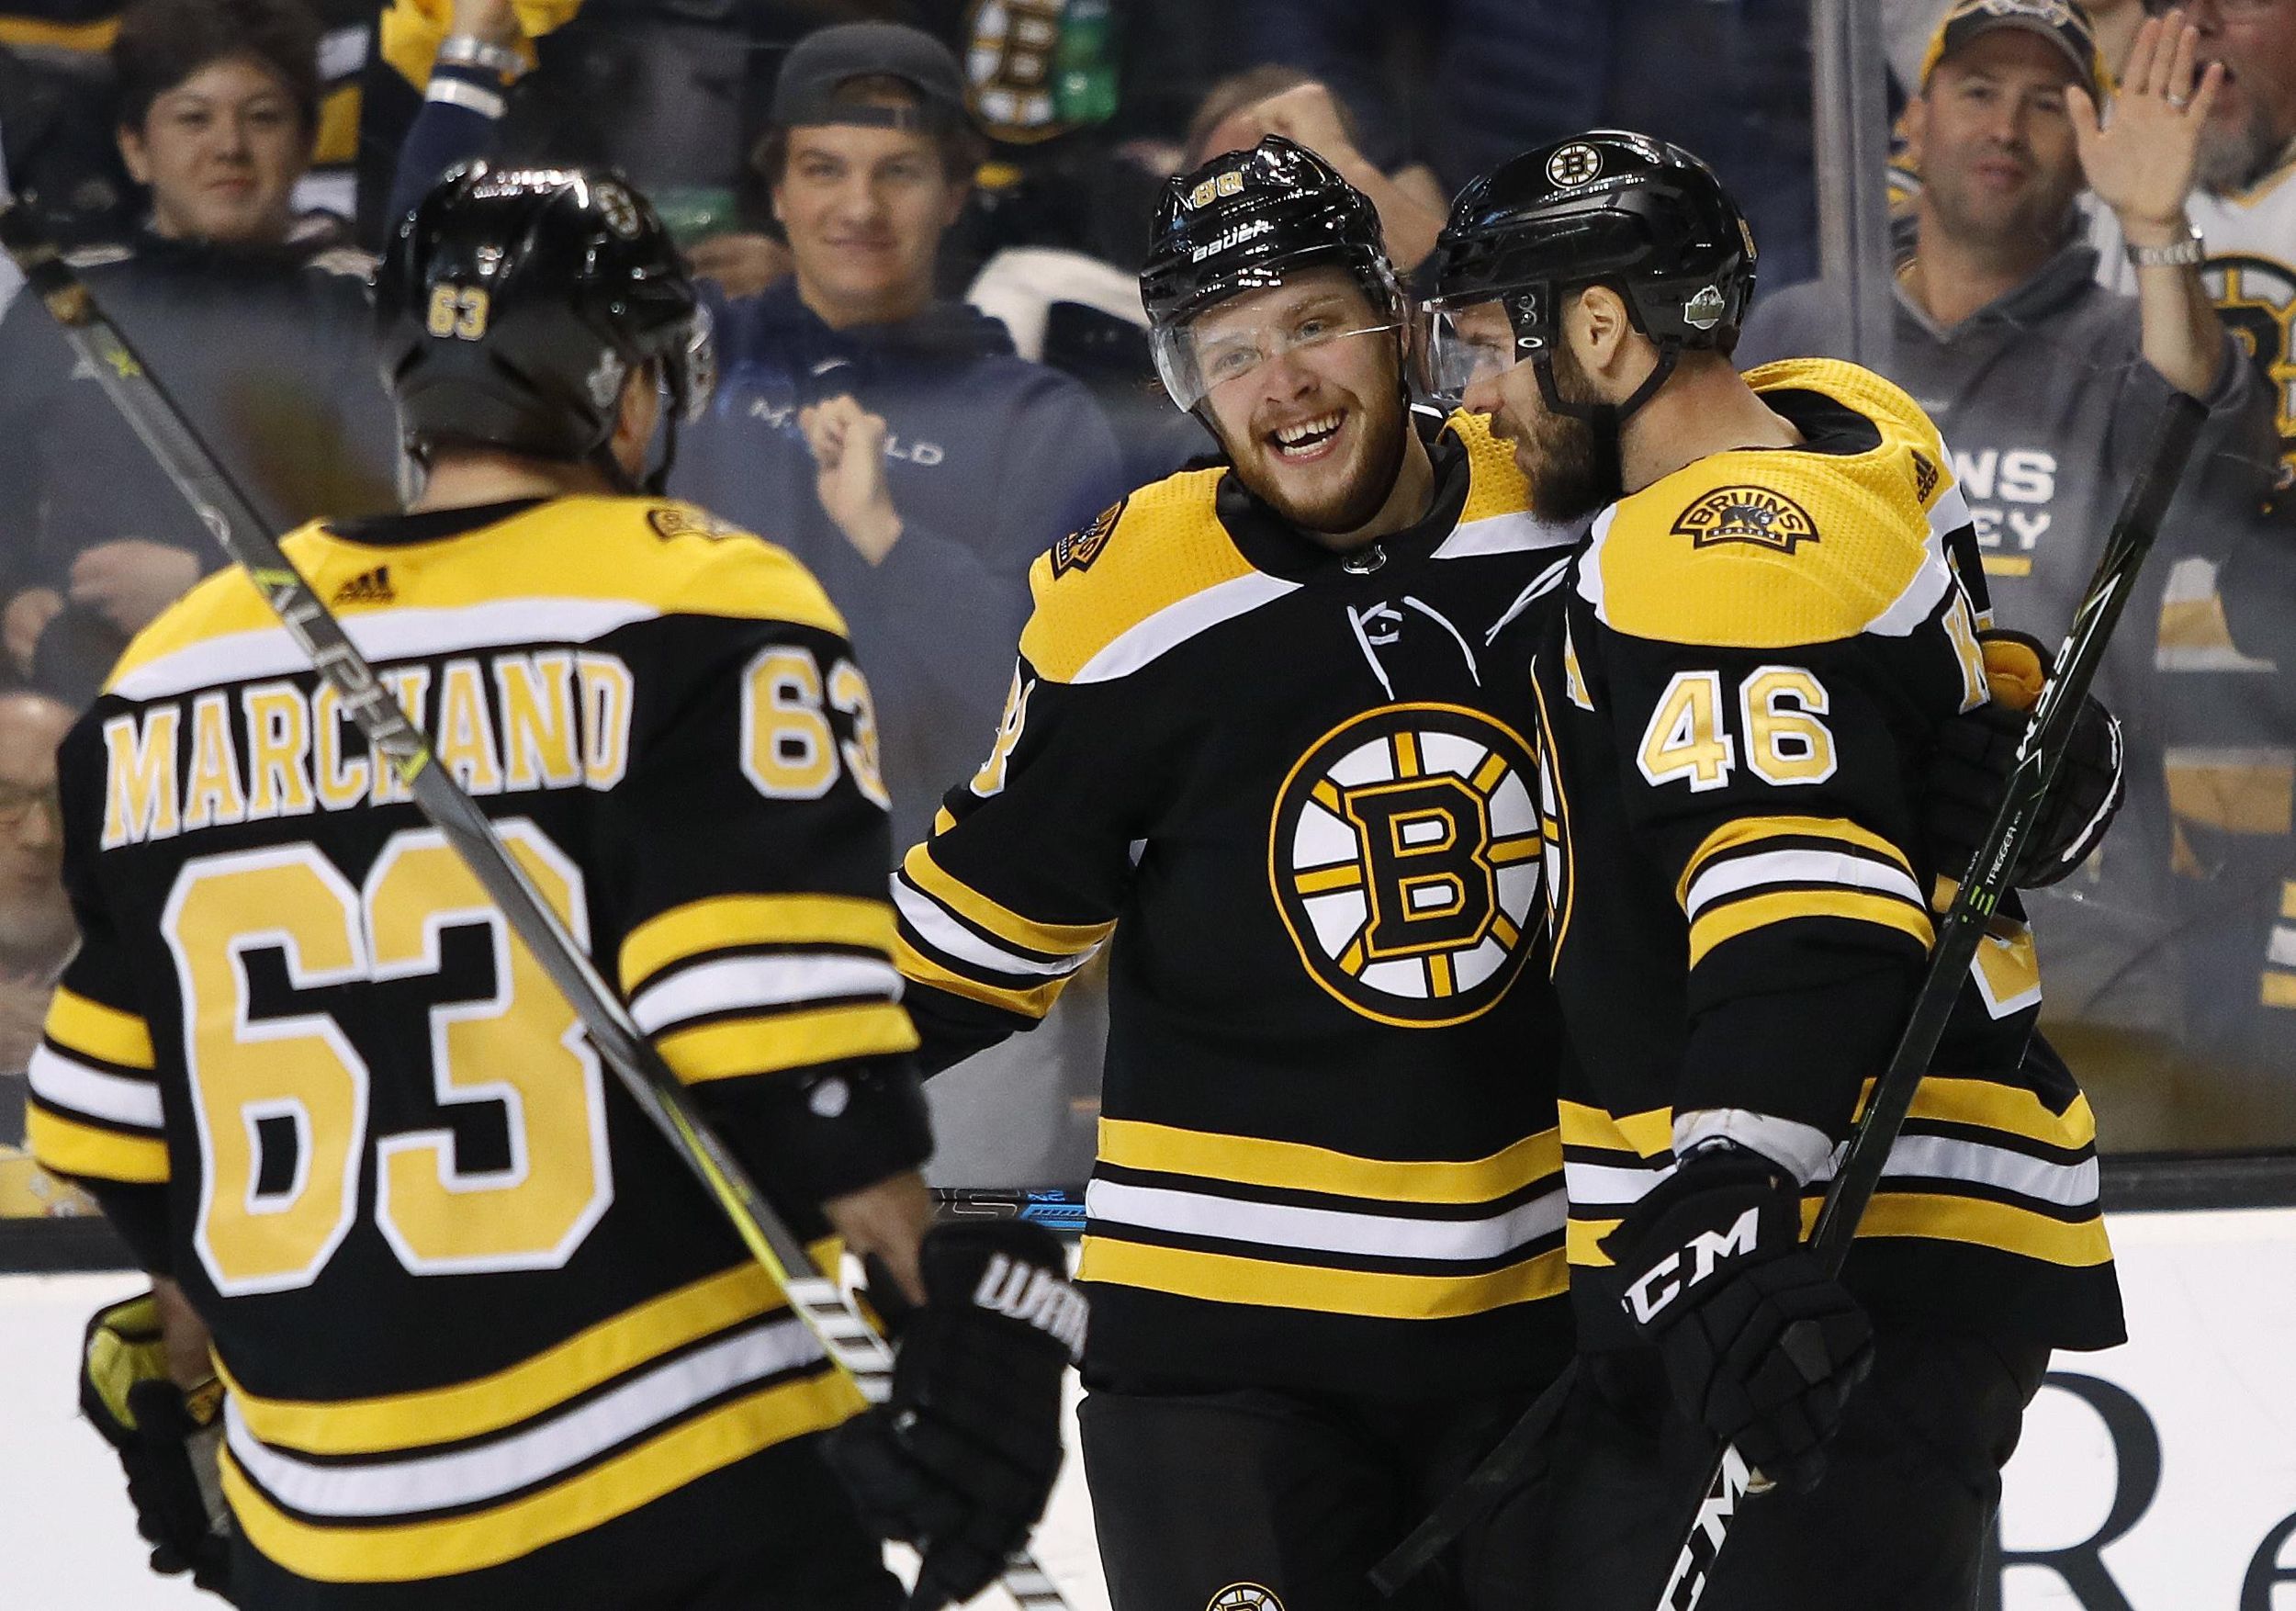 Recap: Pastrnak nets hat trick, Rask wins in Bruins' return